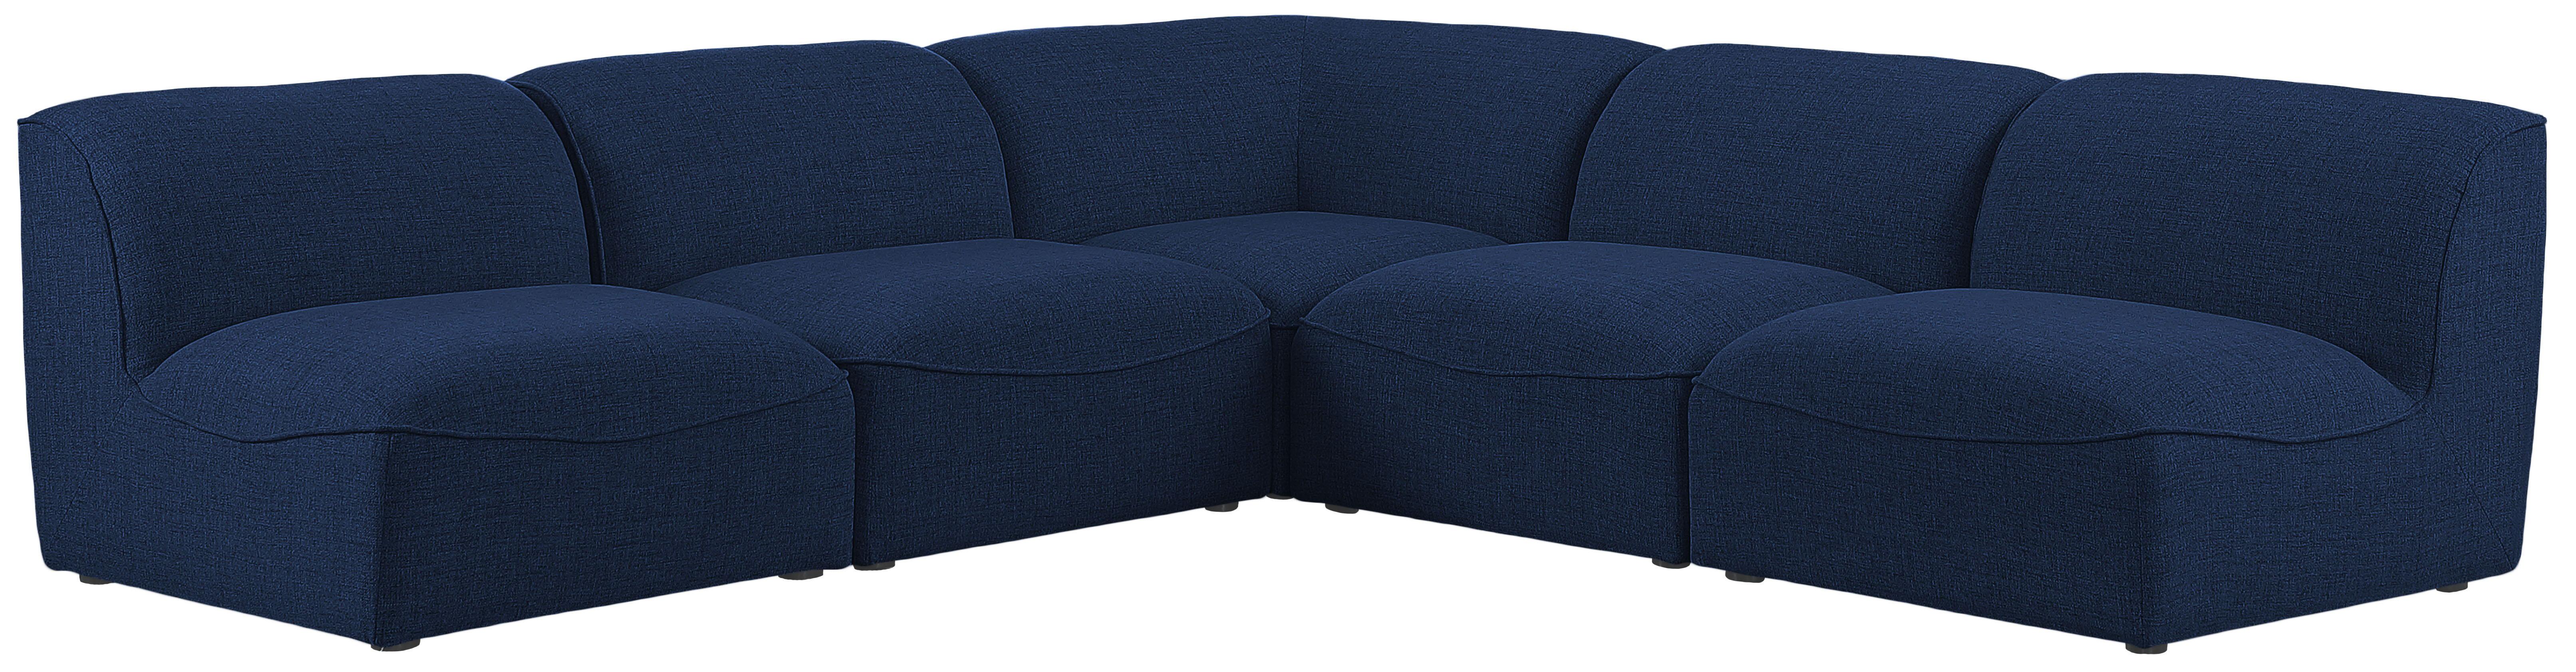 Meridian Furniture - Miramar - Modular Sectional 5 Piece - Navy - Fabric - Modern & Contemporary - 5th Avenue Furniture